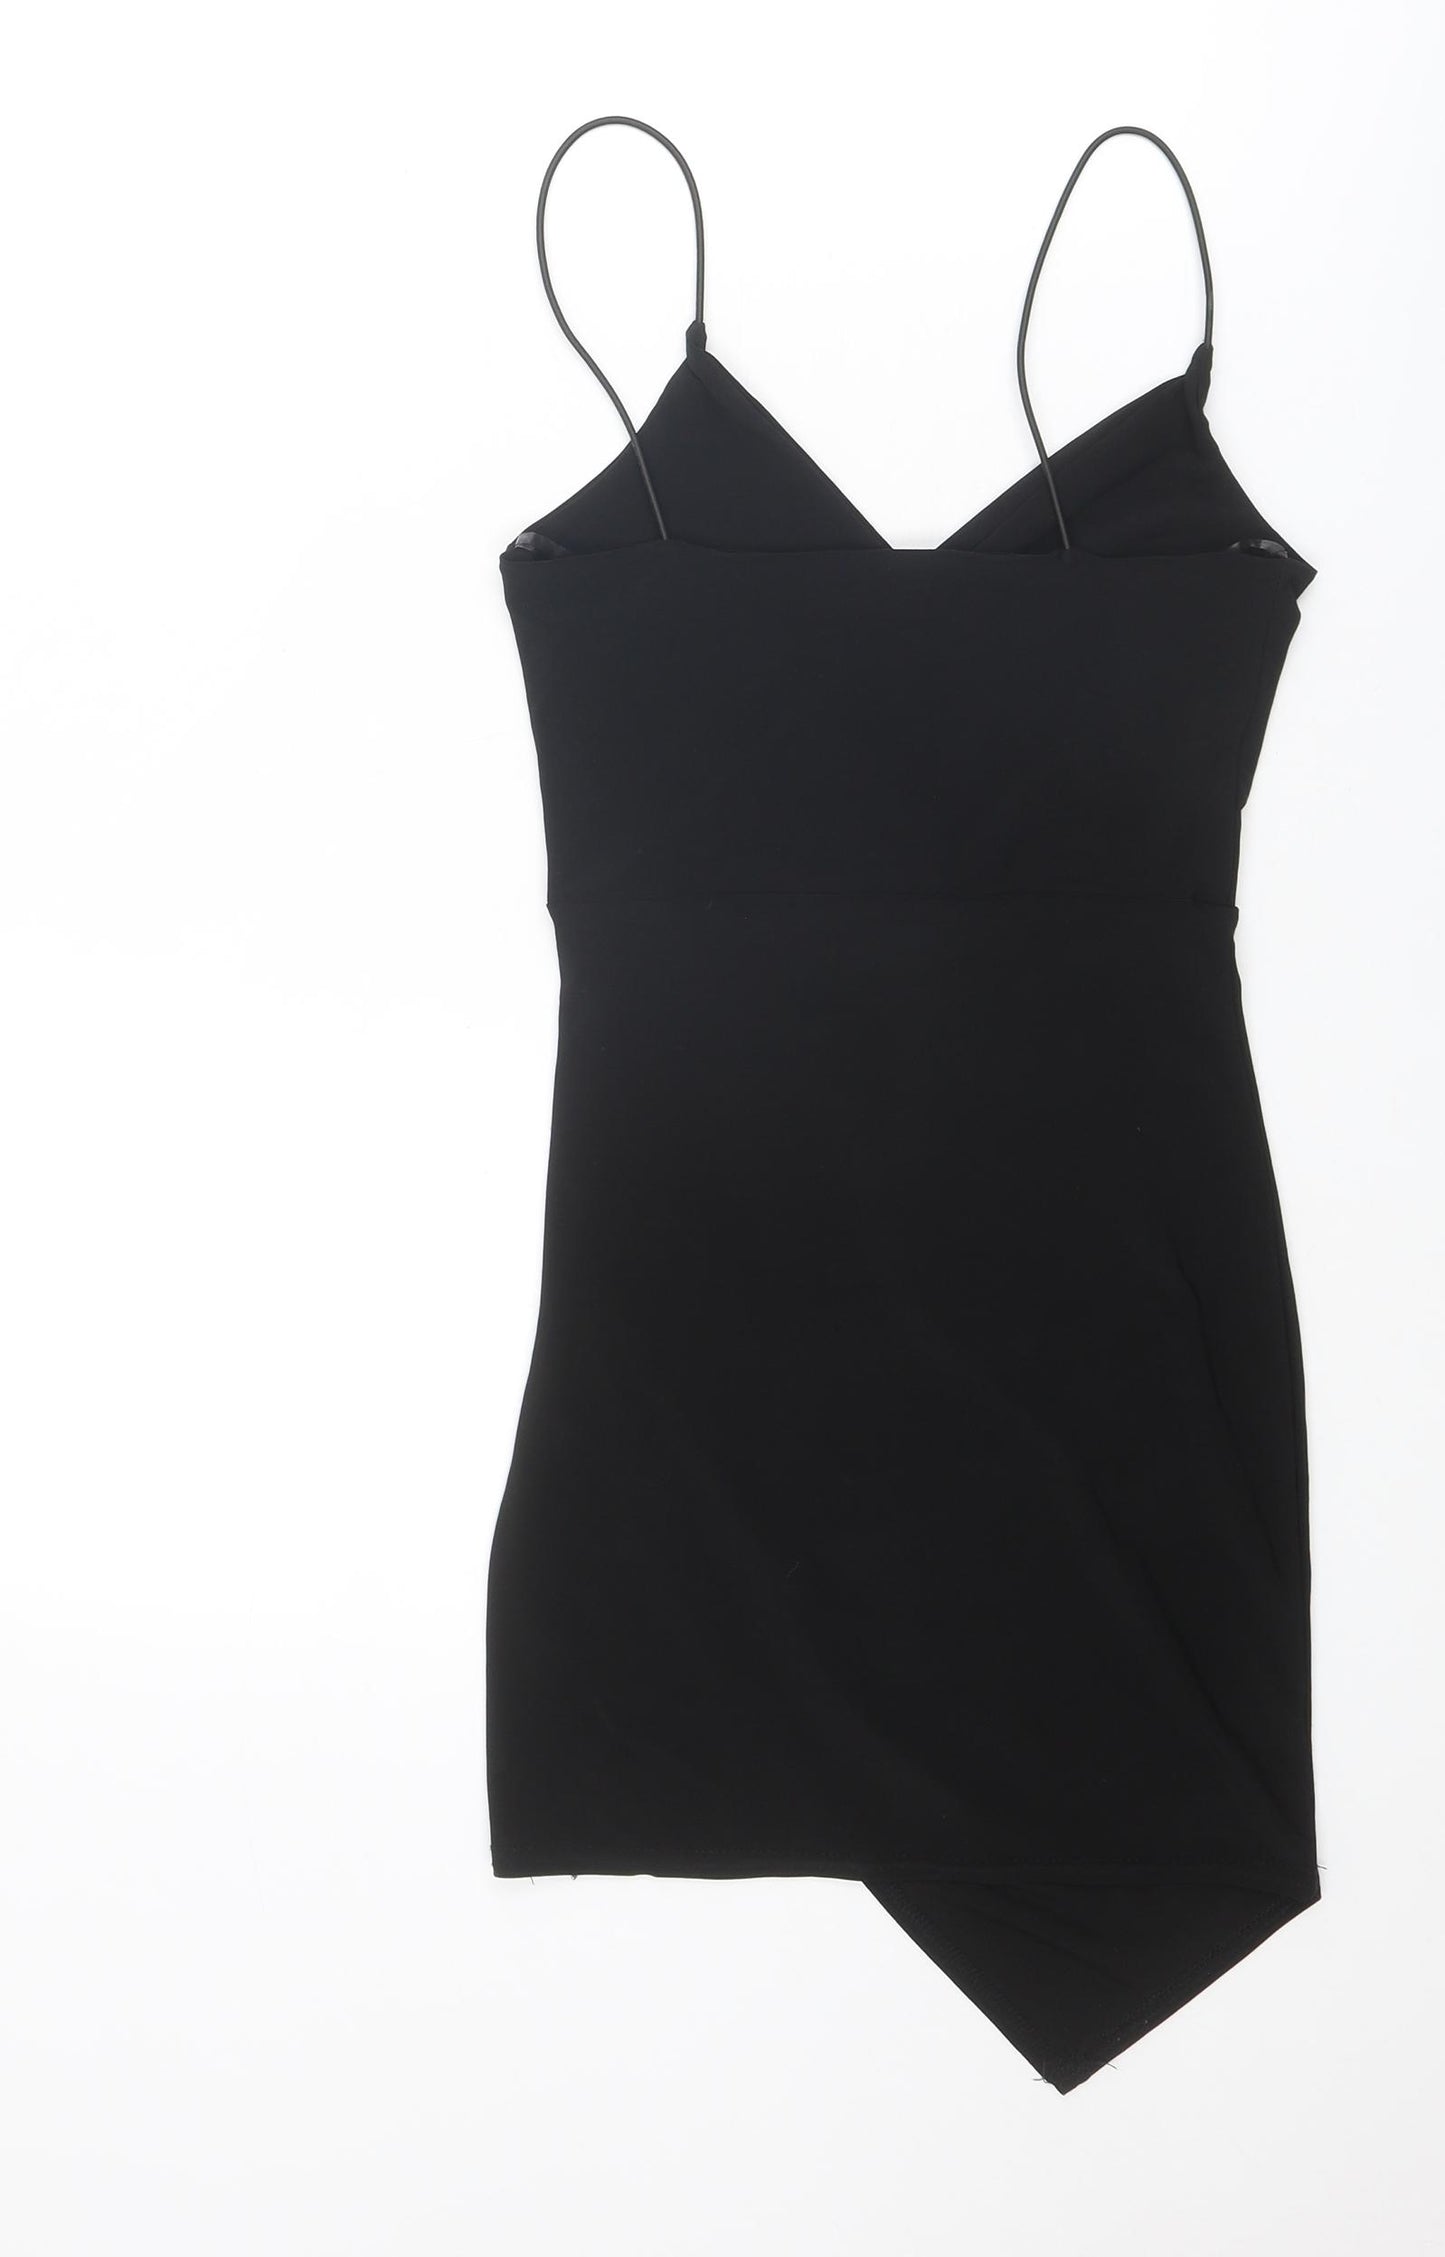 PRETTYLITTLETHING Womens Black Polyester Mini Size 6 V-Neck Pullover